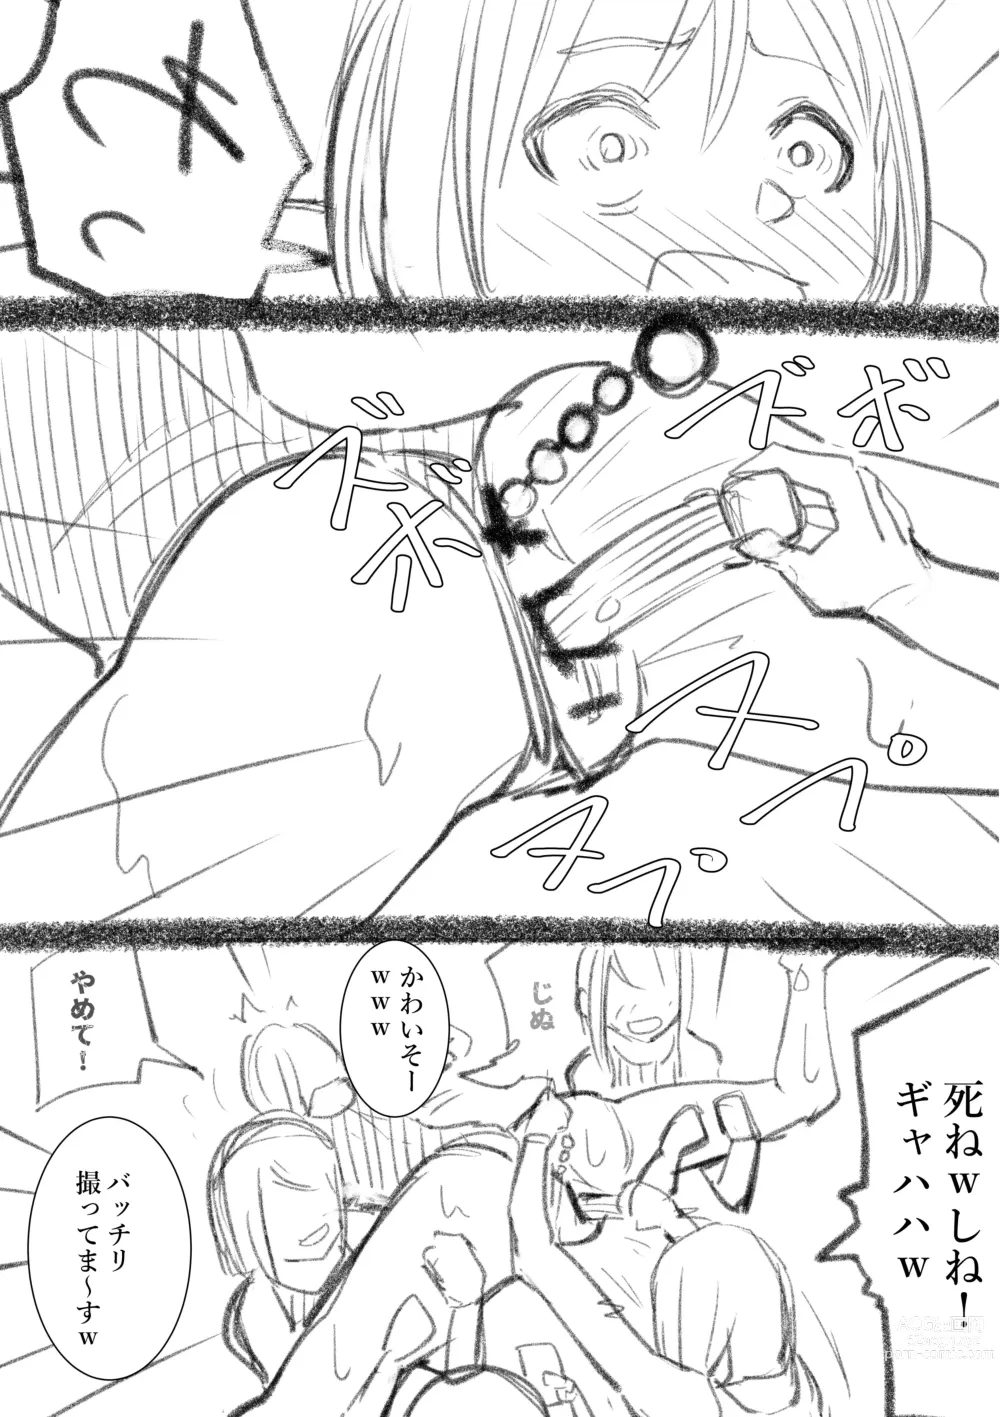 Page 219 of doujinshi Takamurafu manga